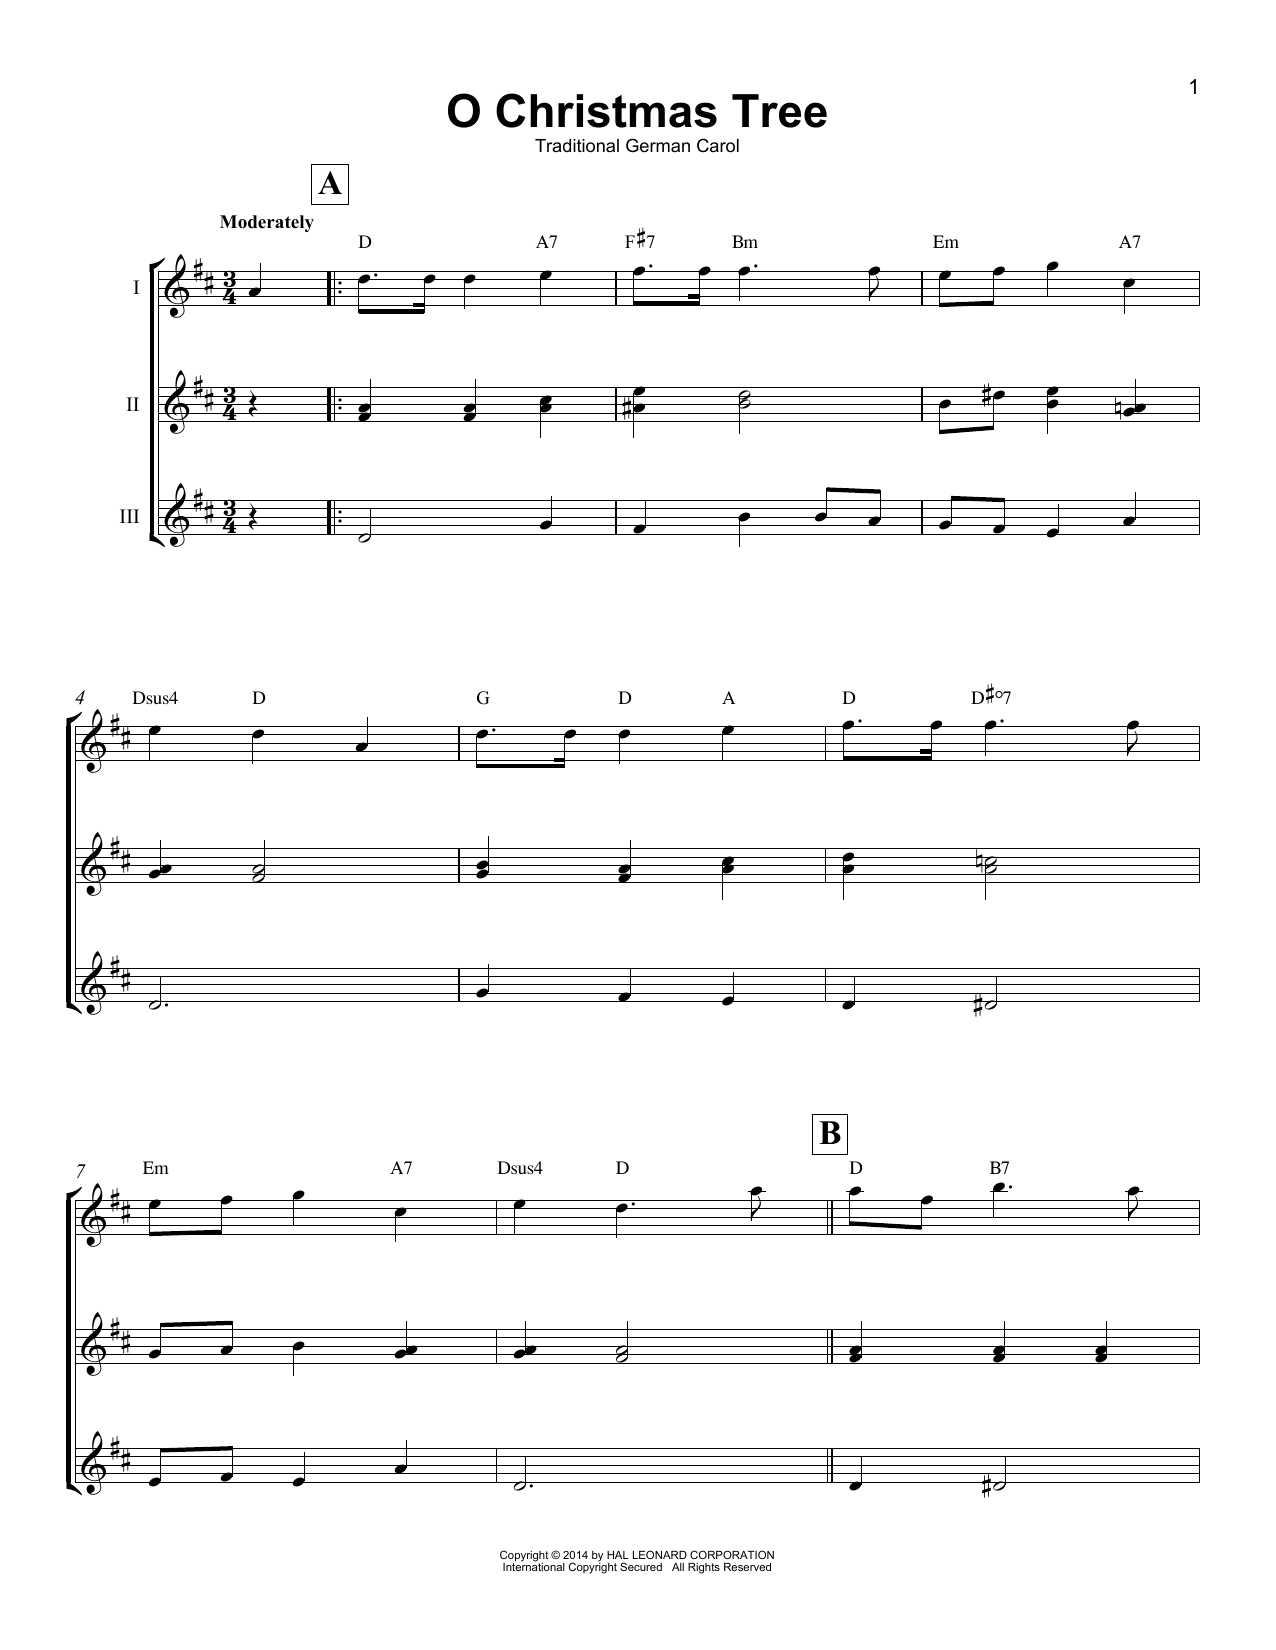 Traditional German Carol O Christmas Tree Sheet Music Notes & Chords for Ukulele Ensemble - Download or Print PDF